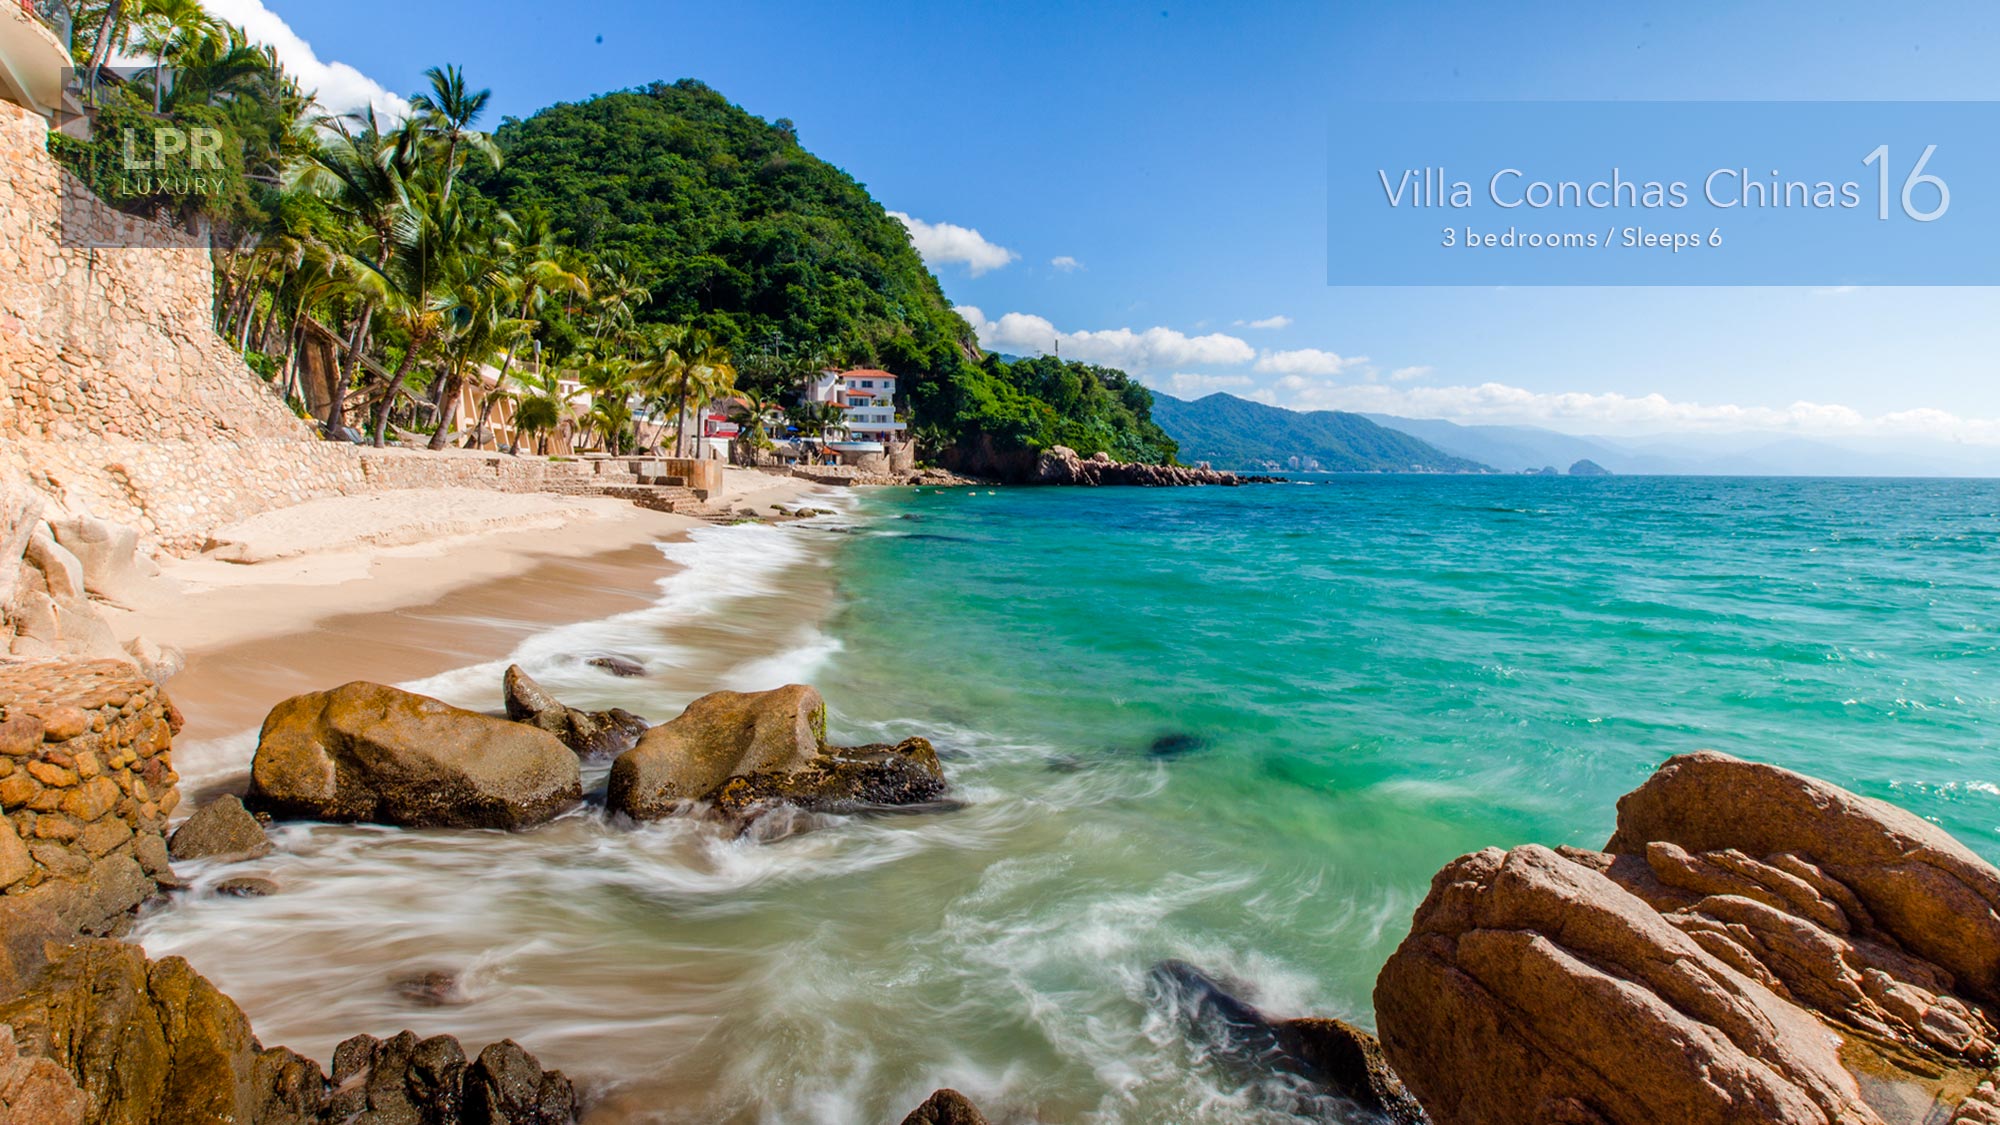 Villa Conchas Chinas 16 - Luxury Puerto Vallarta beachfront vacation rental villa